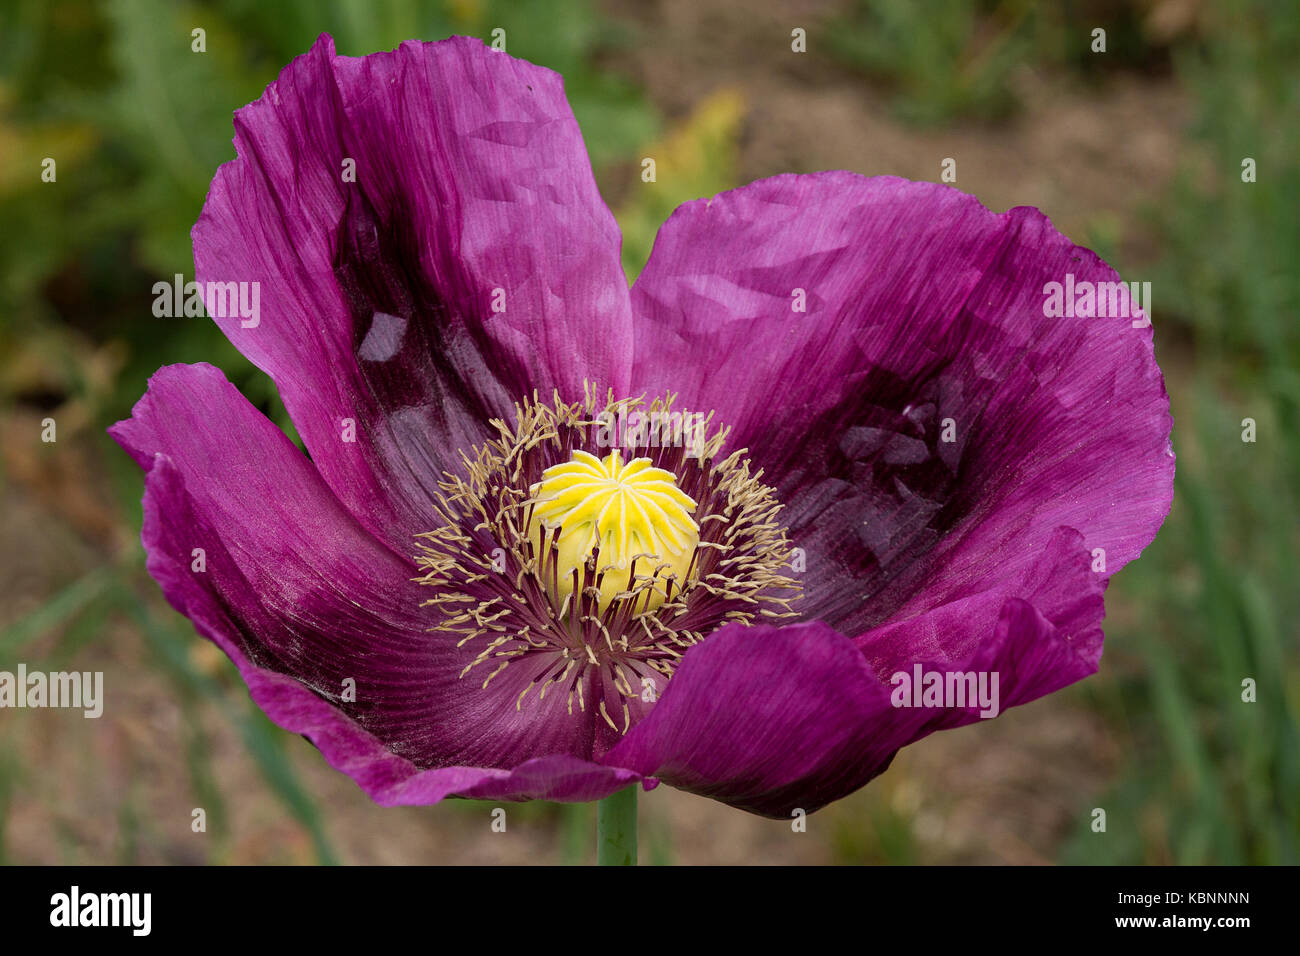 Opium poppies known as Papaver Somniferum in Latin, Turkey. Stock Photo